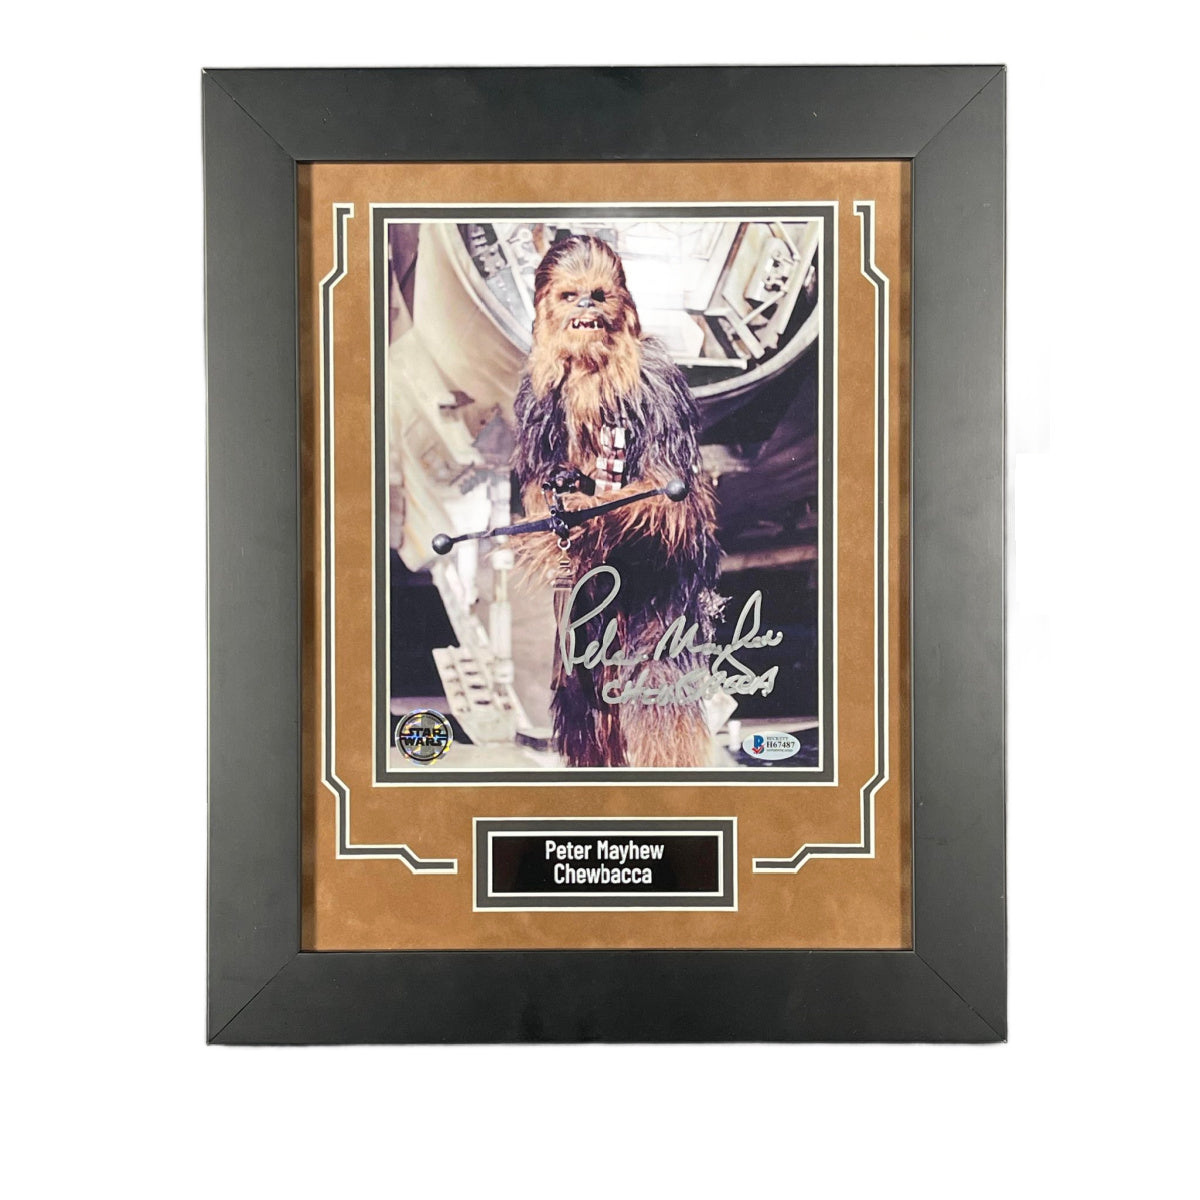 Peter Mayhew Signed 8x10 Photo Star Wars Chewbacca Autographed BAS COA